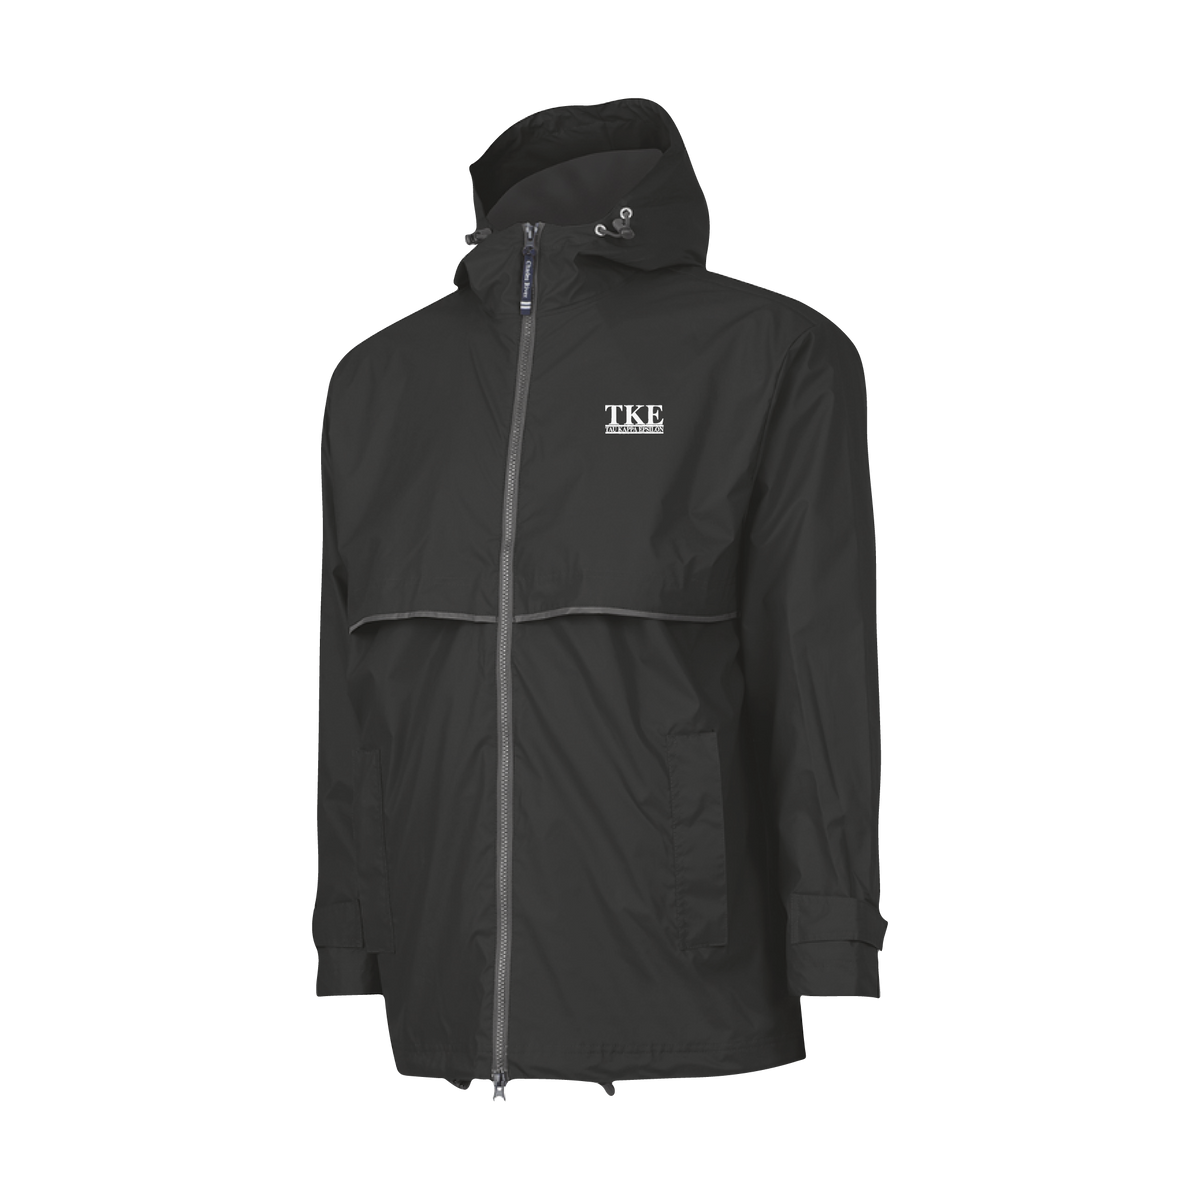 B-Unlimited Greek - Rain Jacket (TKE) - Charles River - 9199 - New Englander Rain Jacket - Black